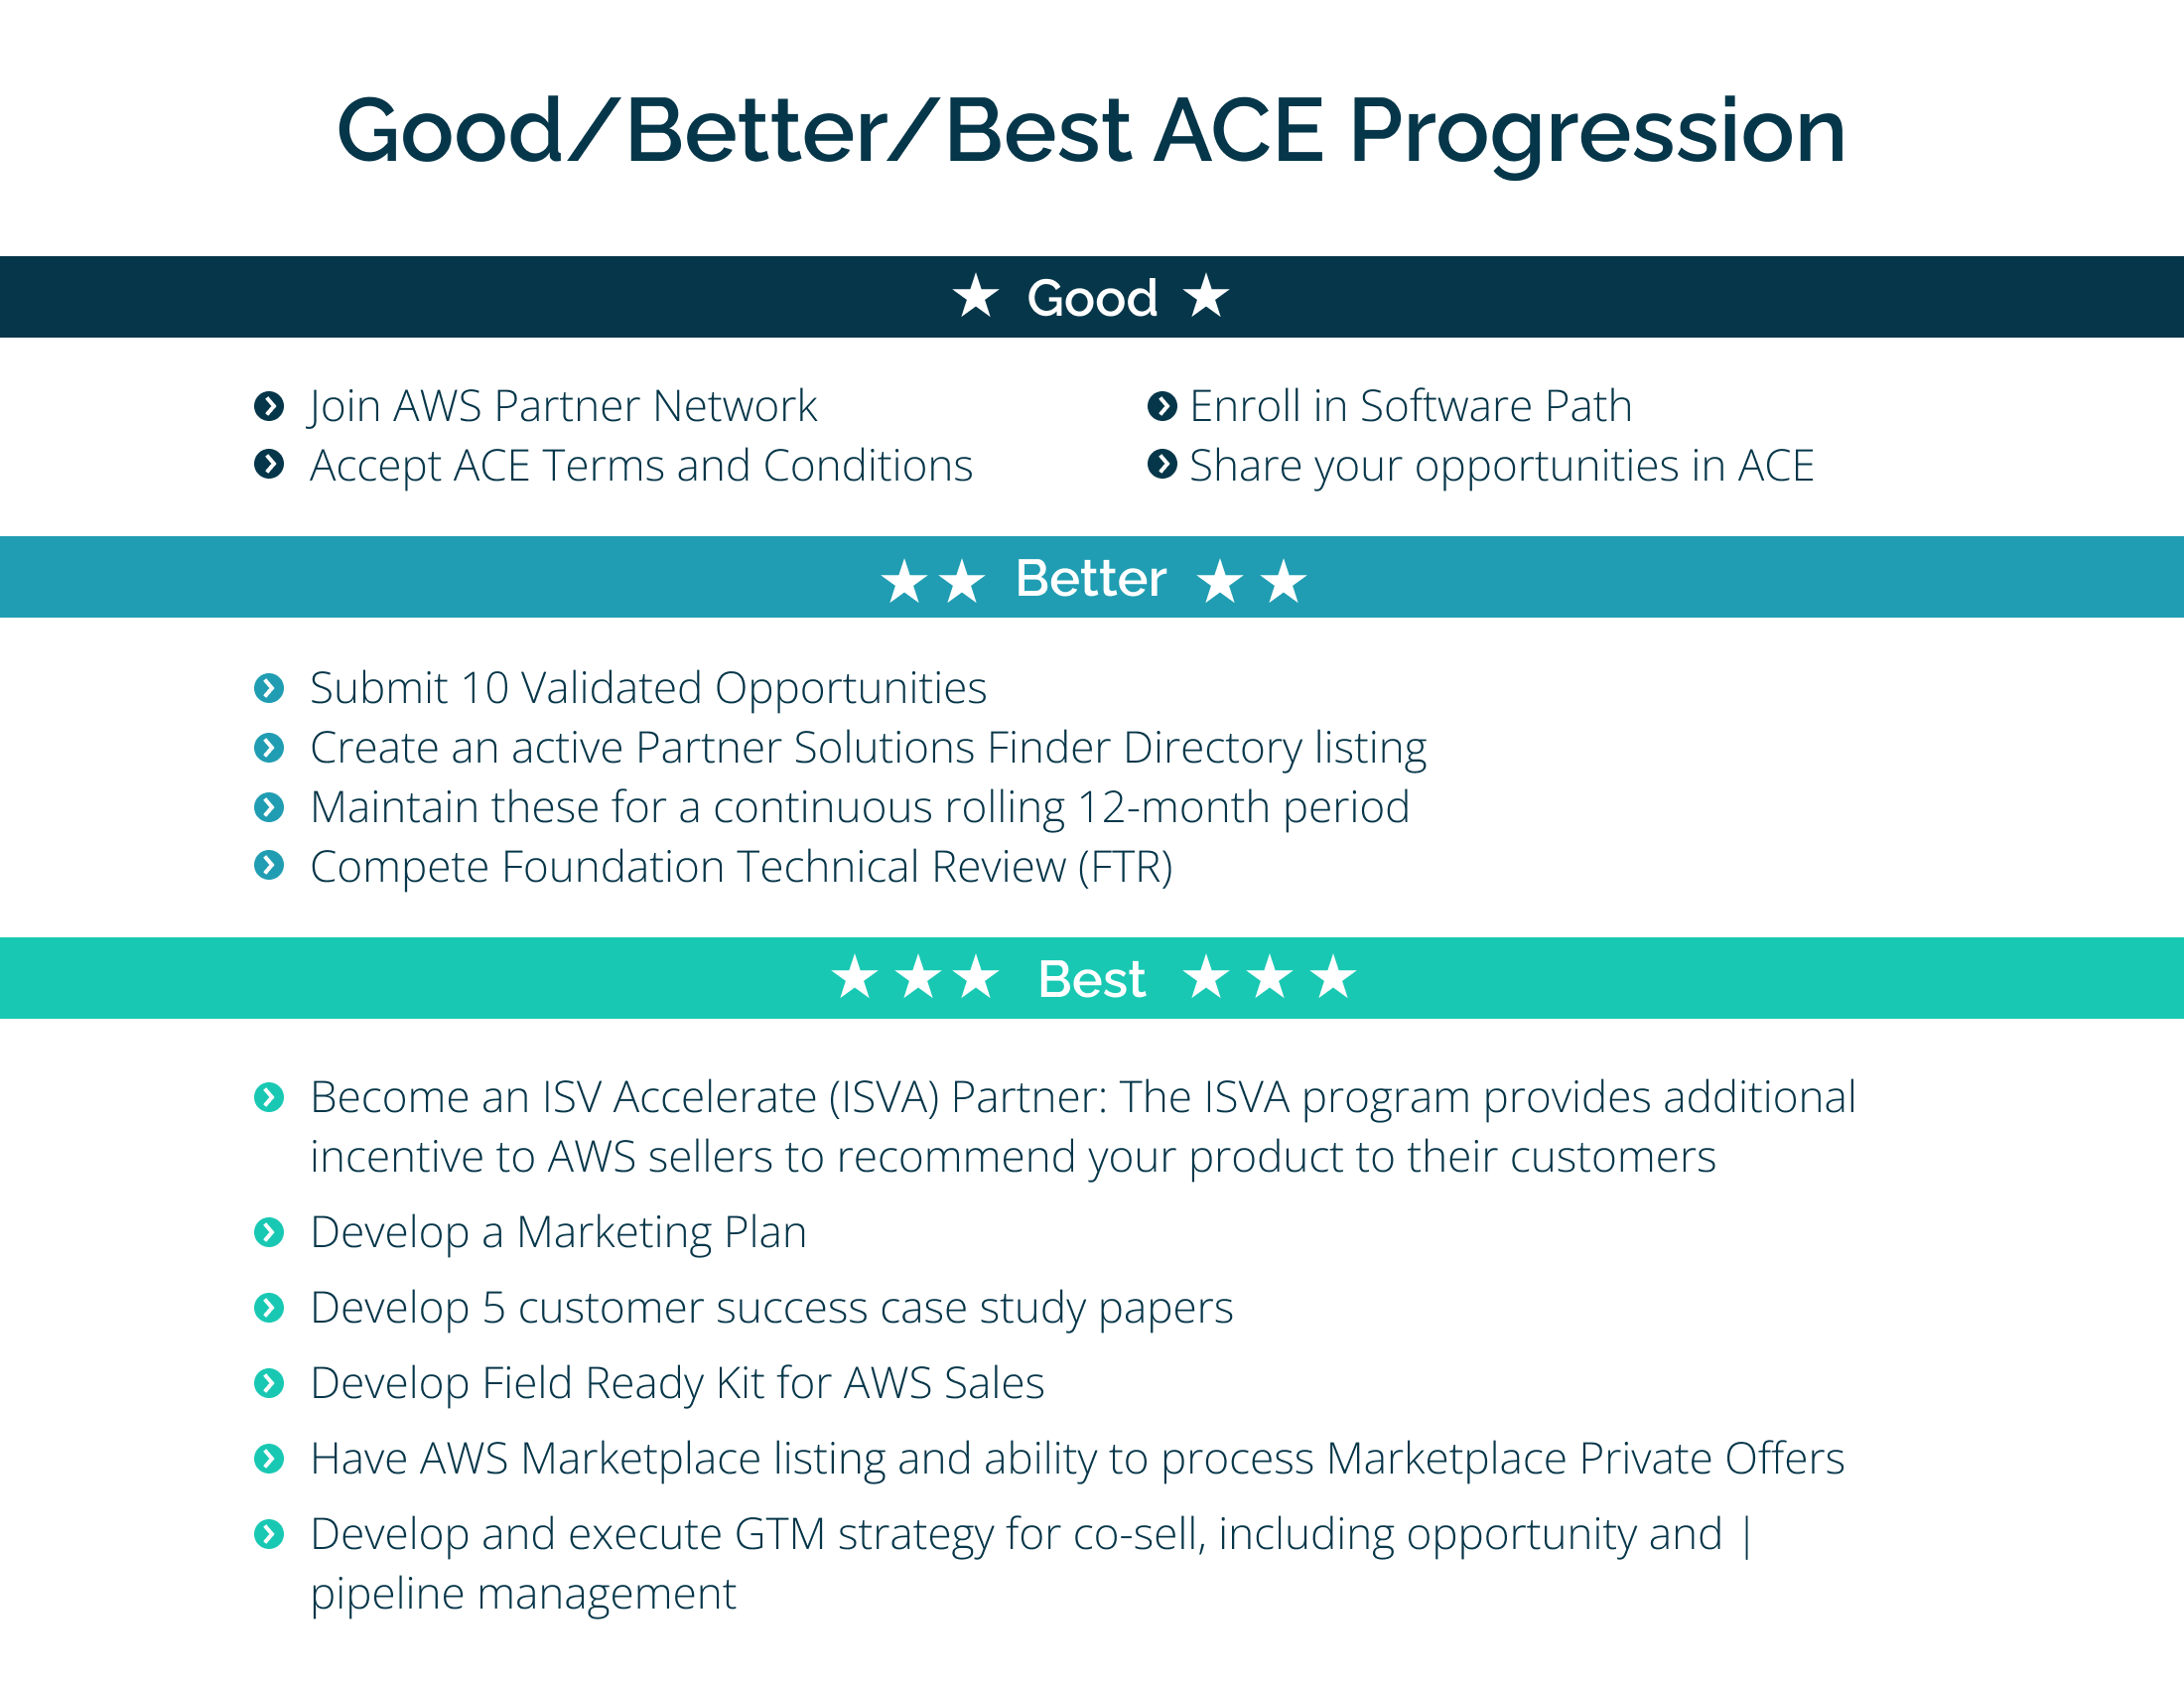 Good, Better, Best ACE progression